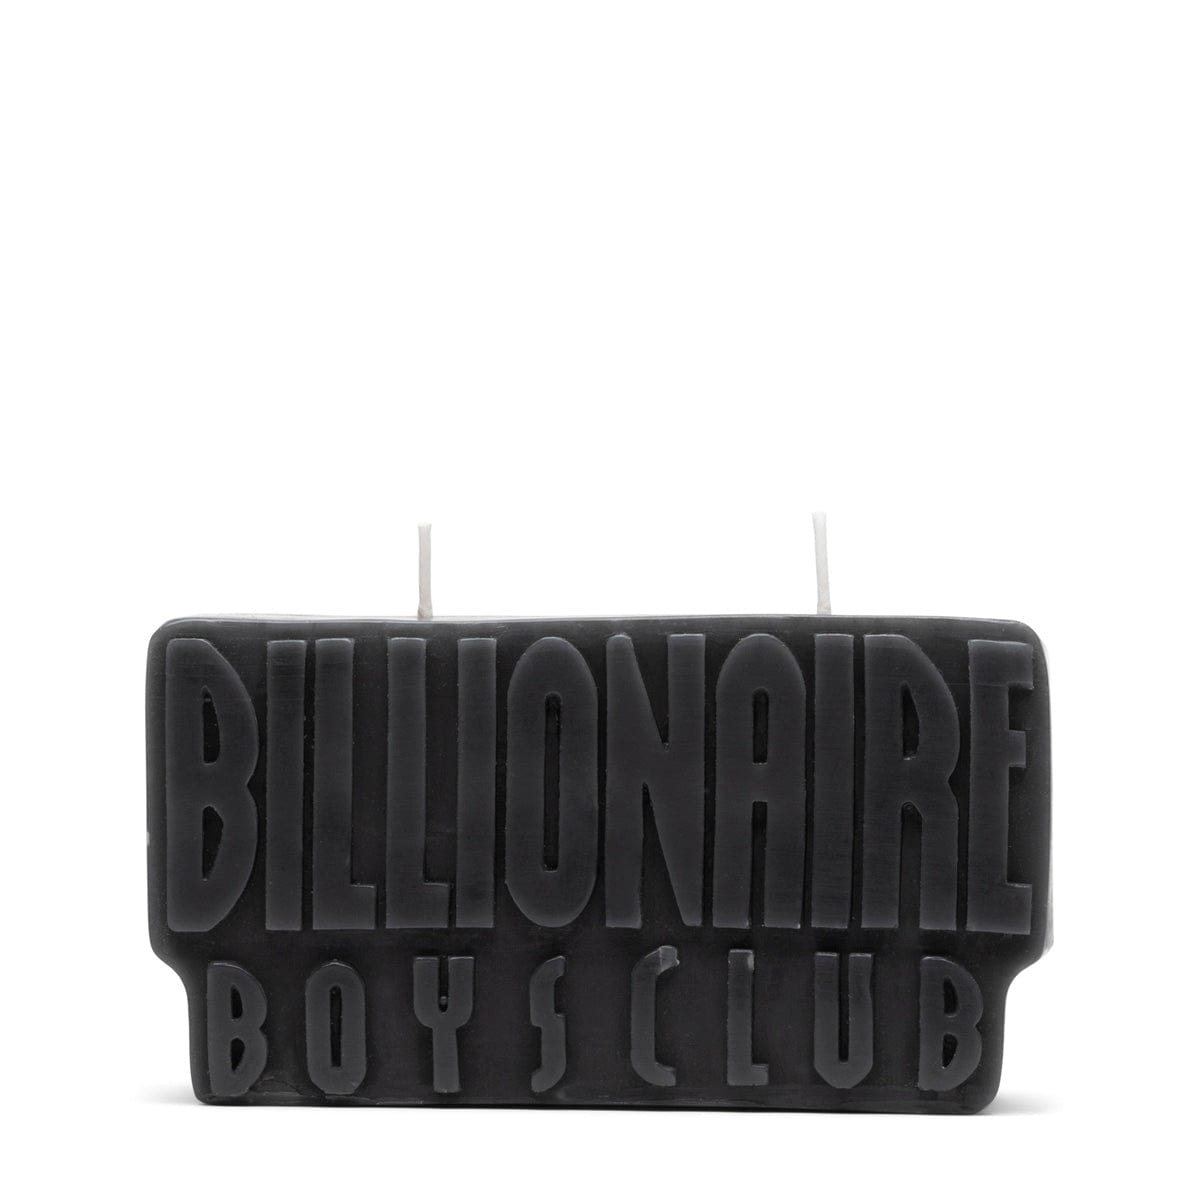 Billionaire Boys Club Home BLACK / O/S STRAIGHT CANDLE